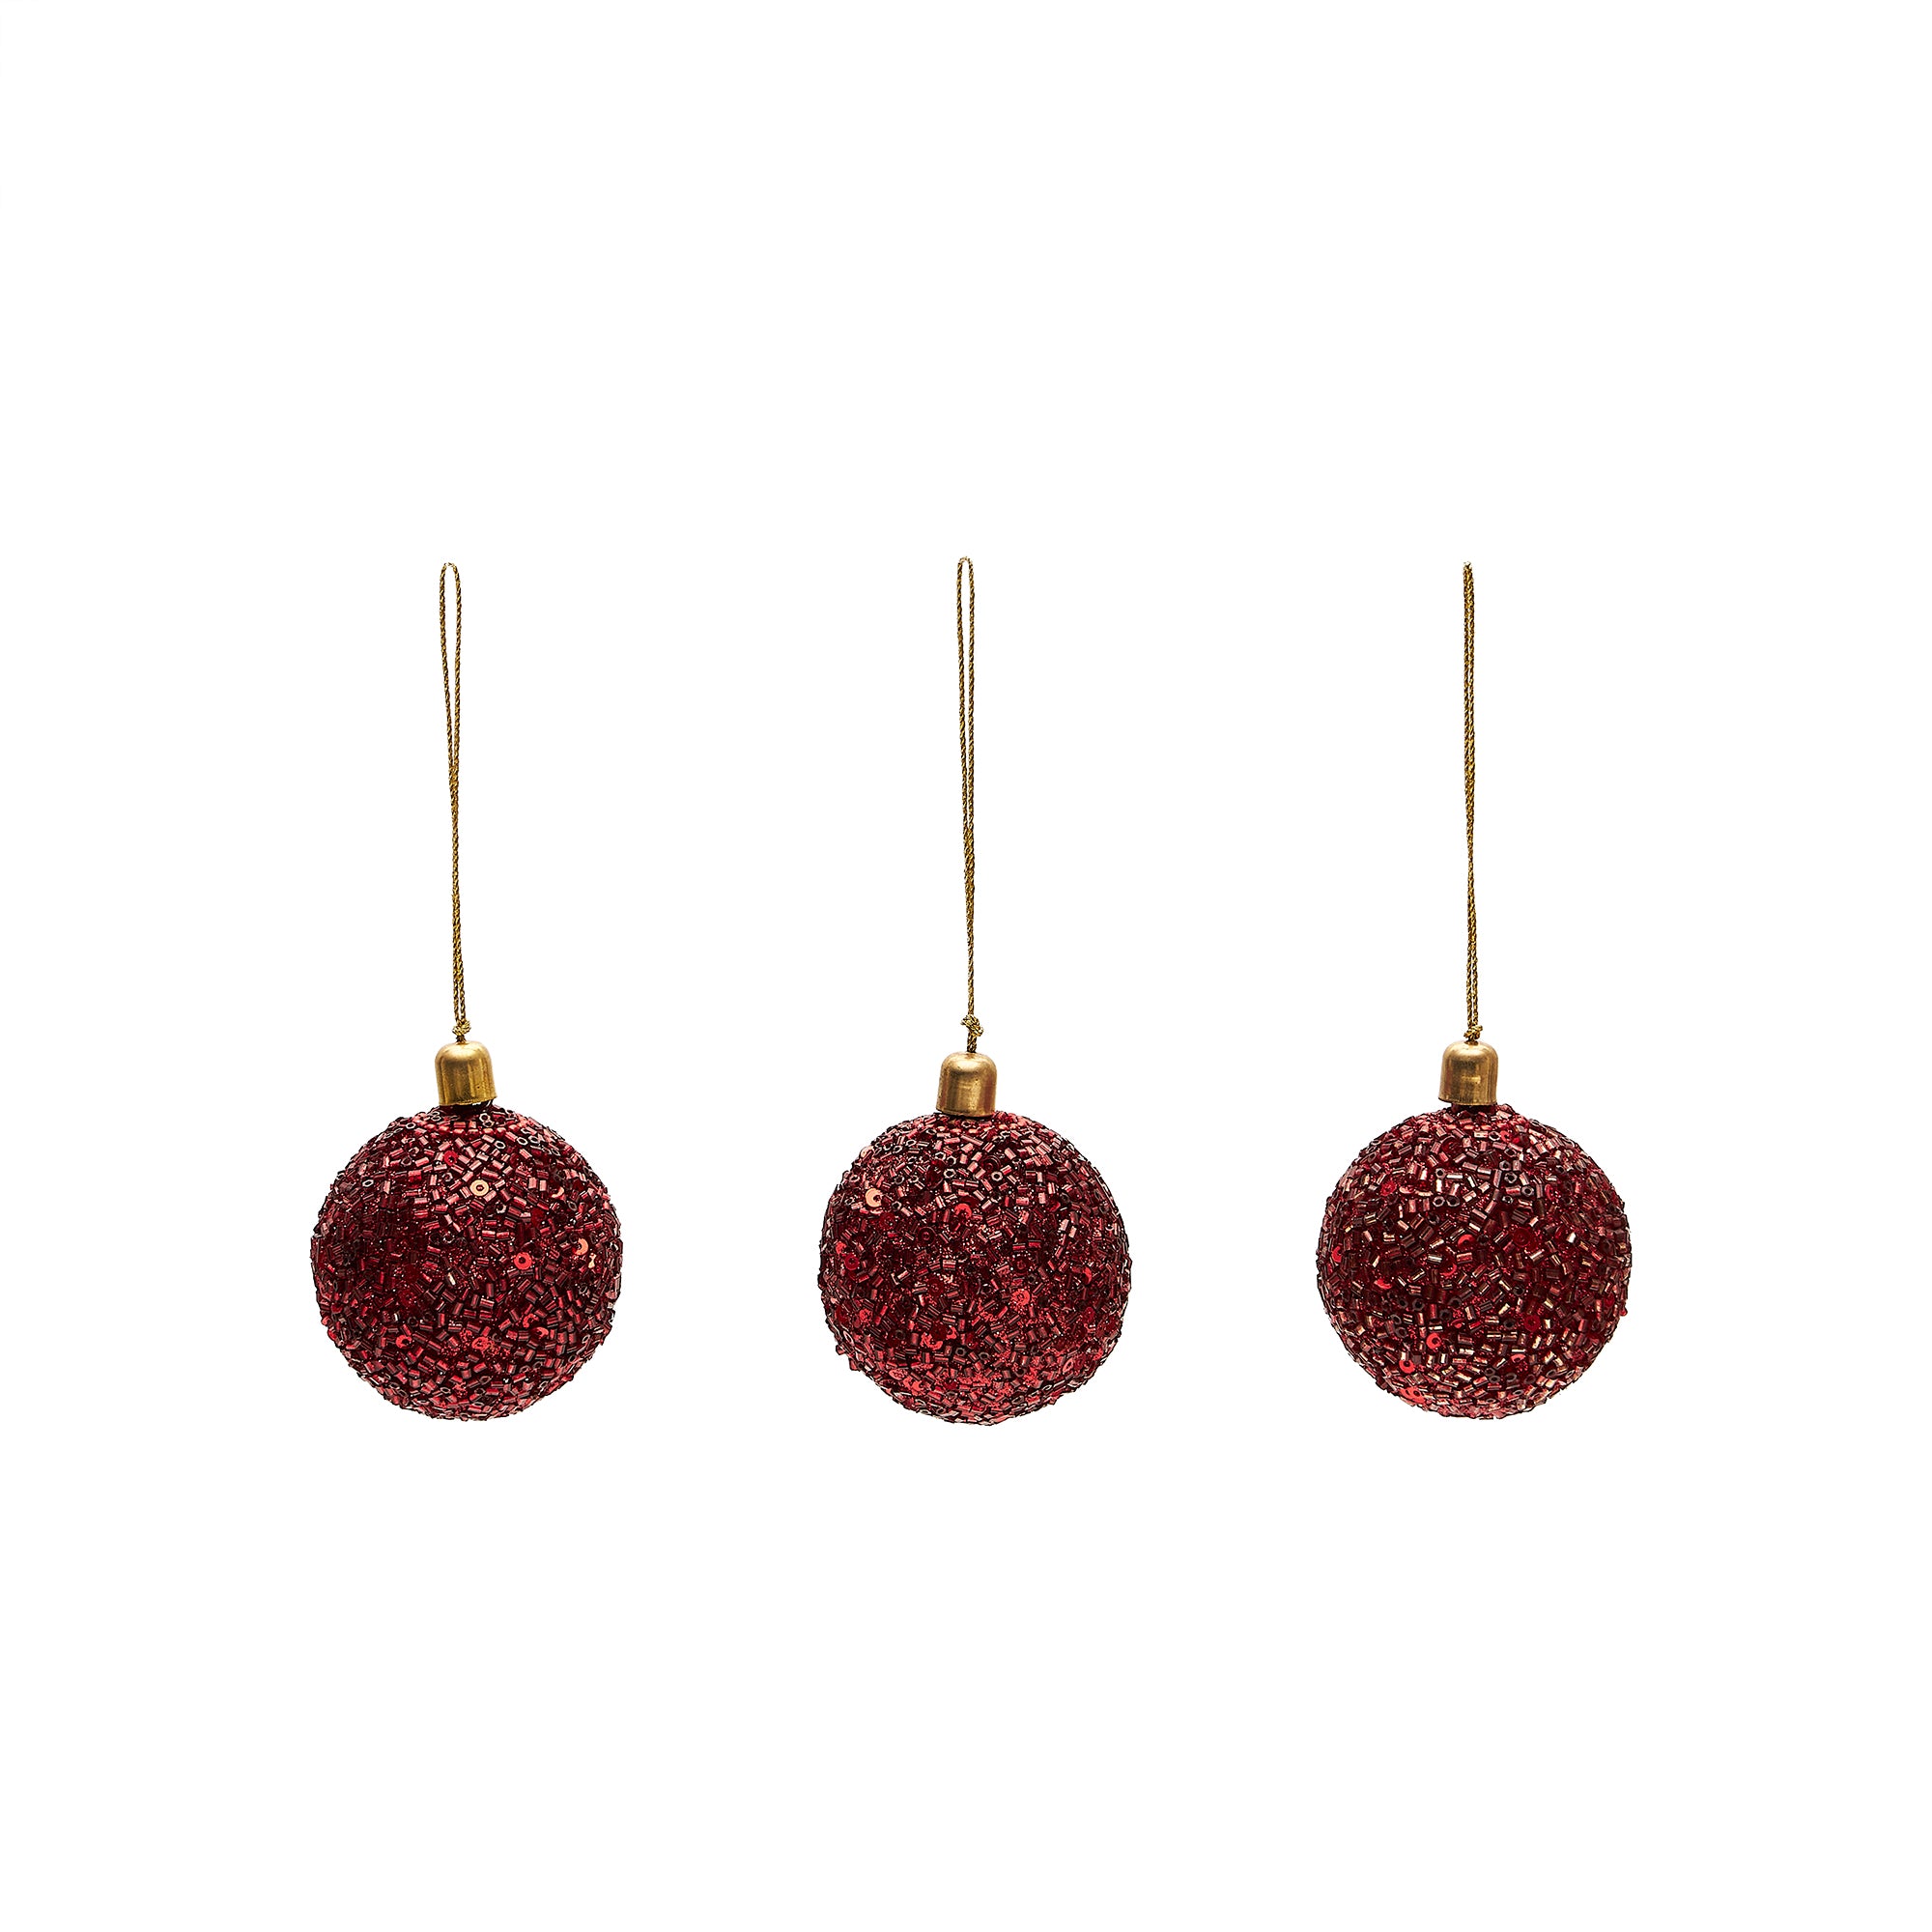 Briam set of 3 small red decorative pendant balls